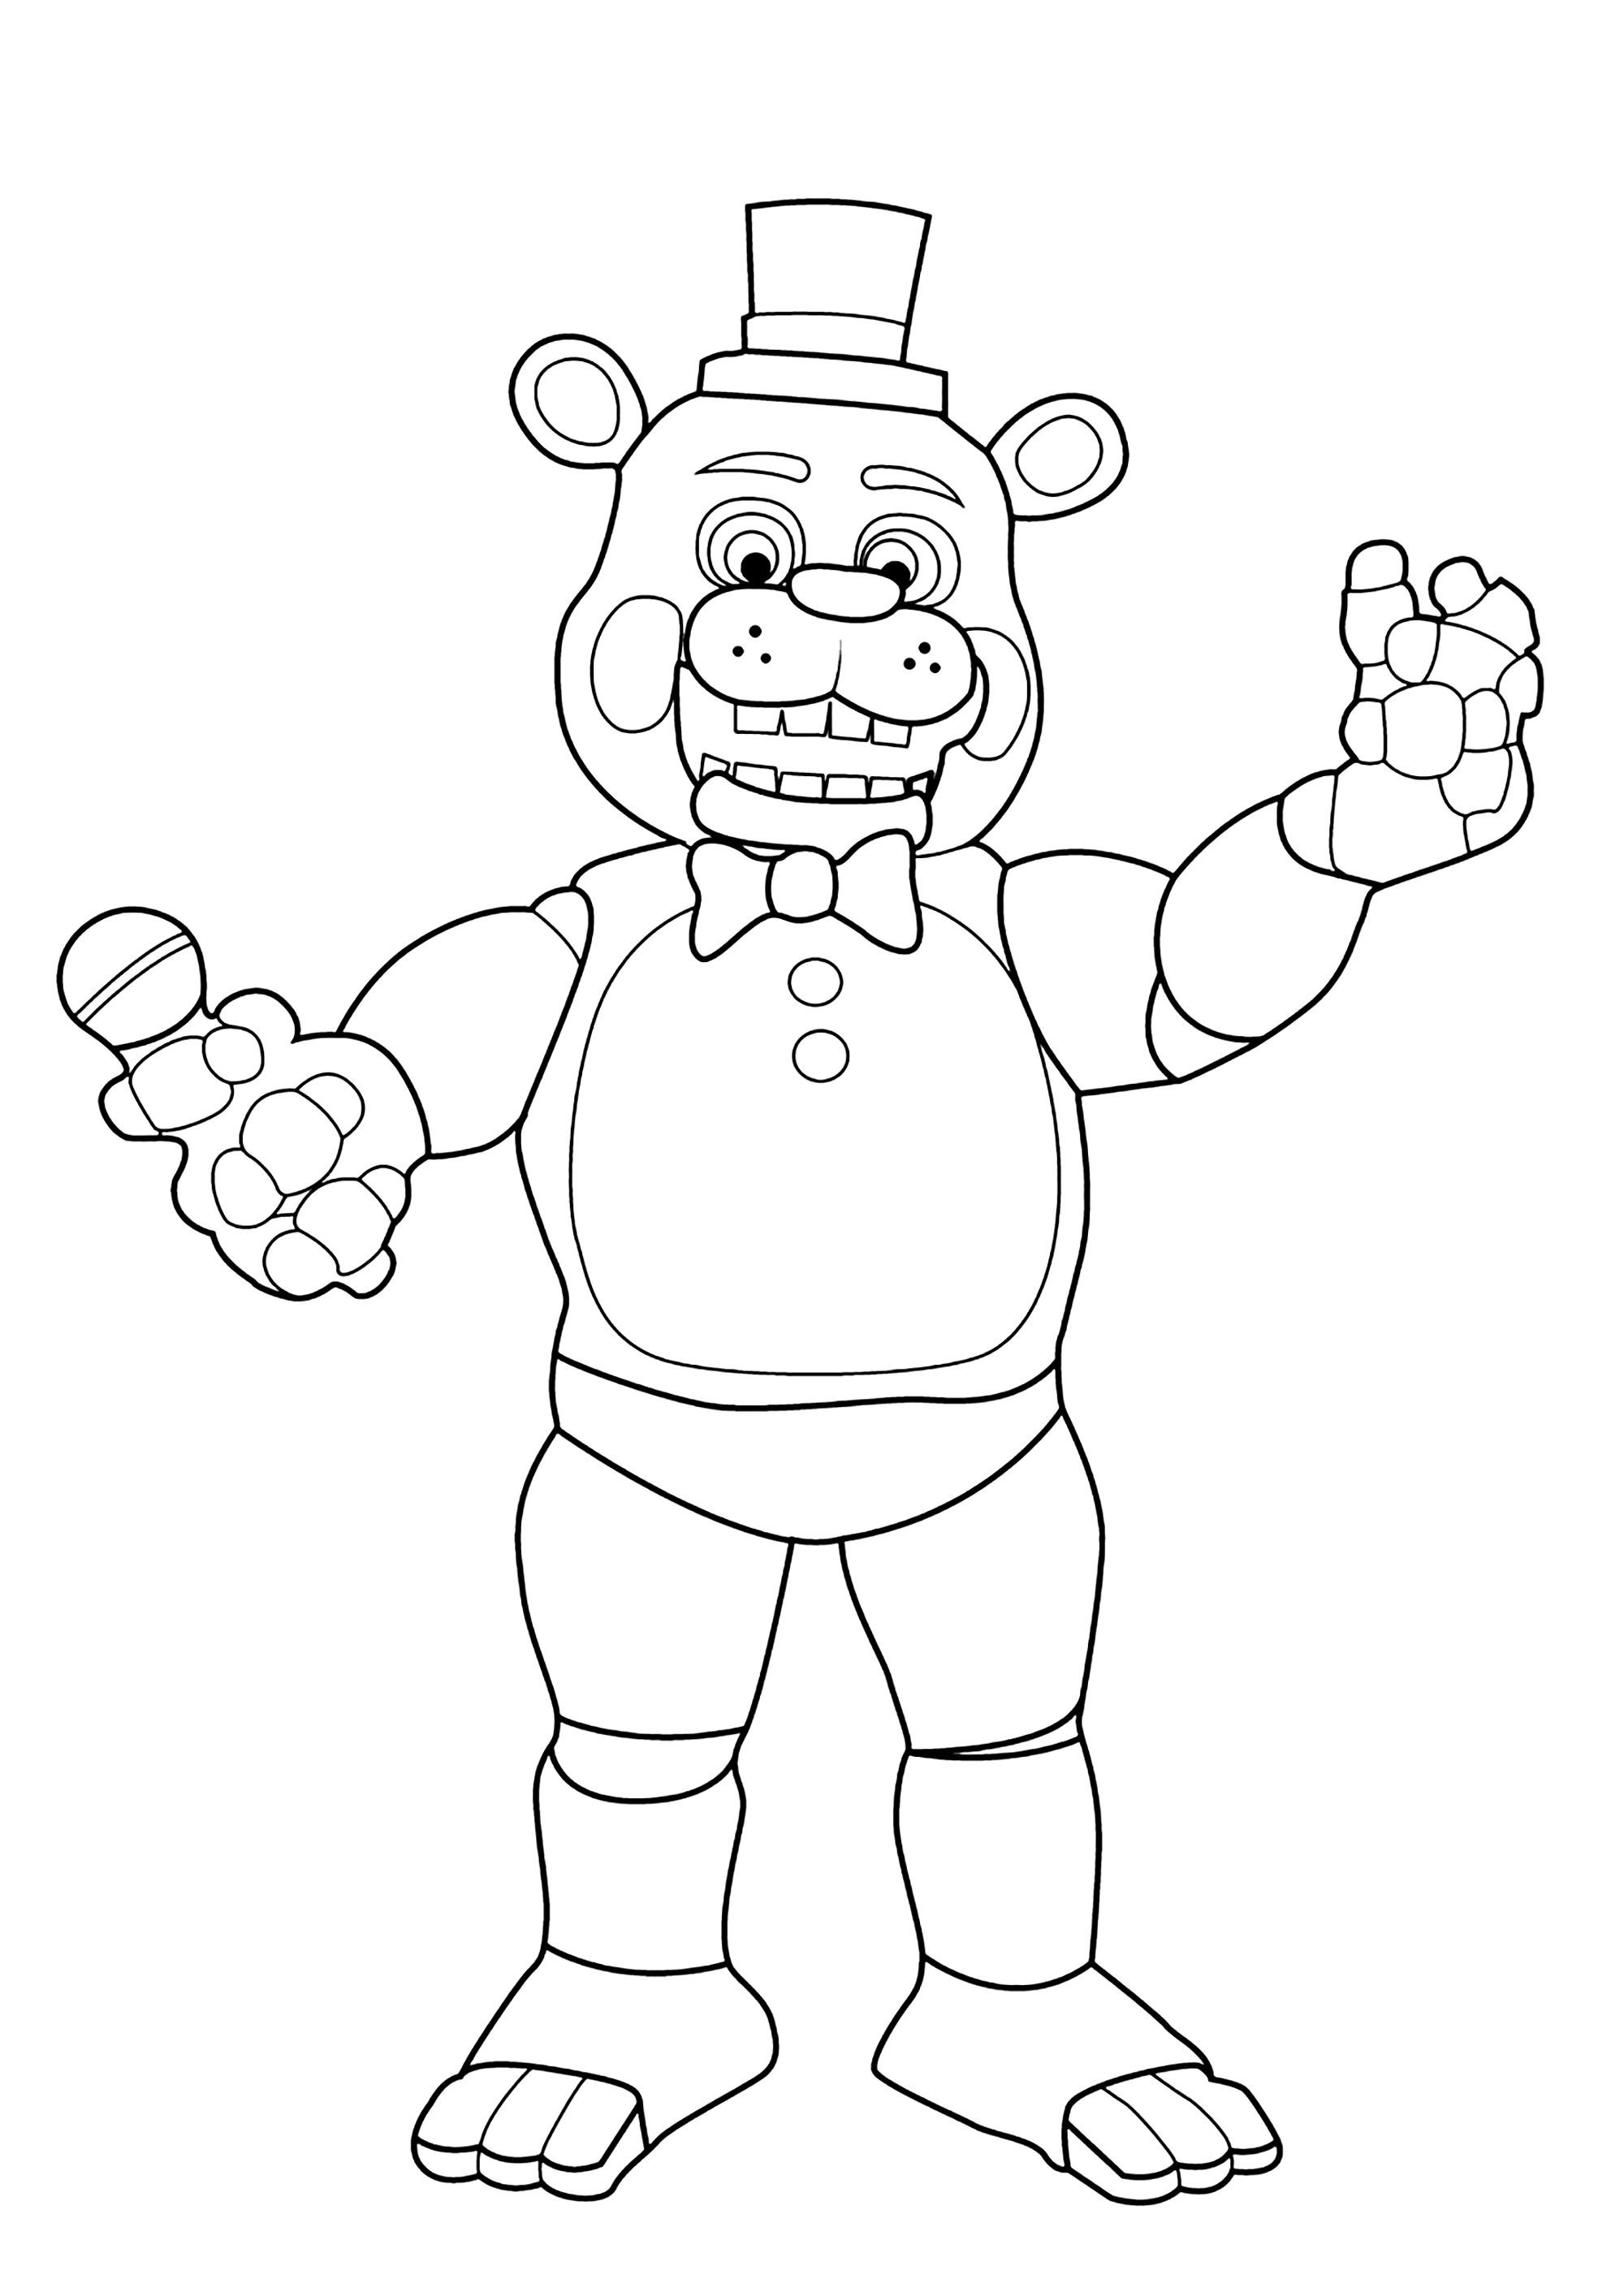 Freddy Fazbear : l'ours animatronique. Freddy est un ours animatronique et la mascotte de la pizza originale de Freddy Fazbear.